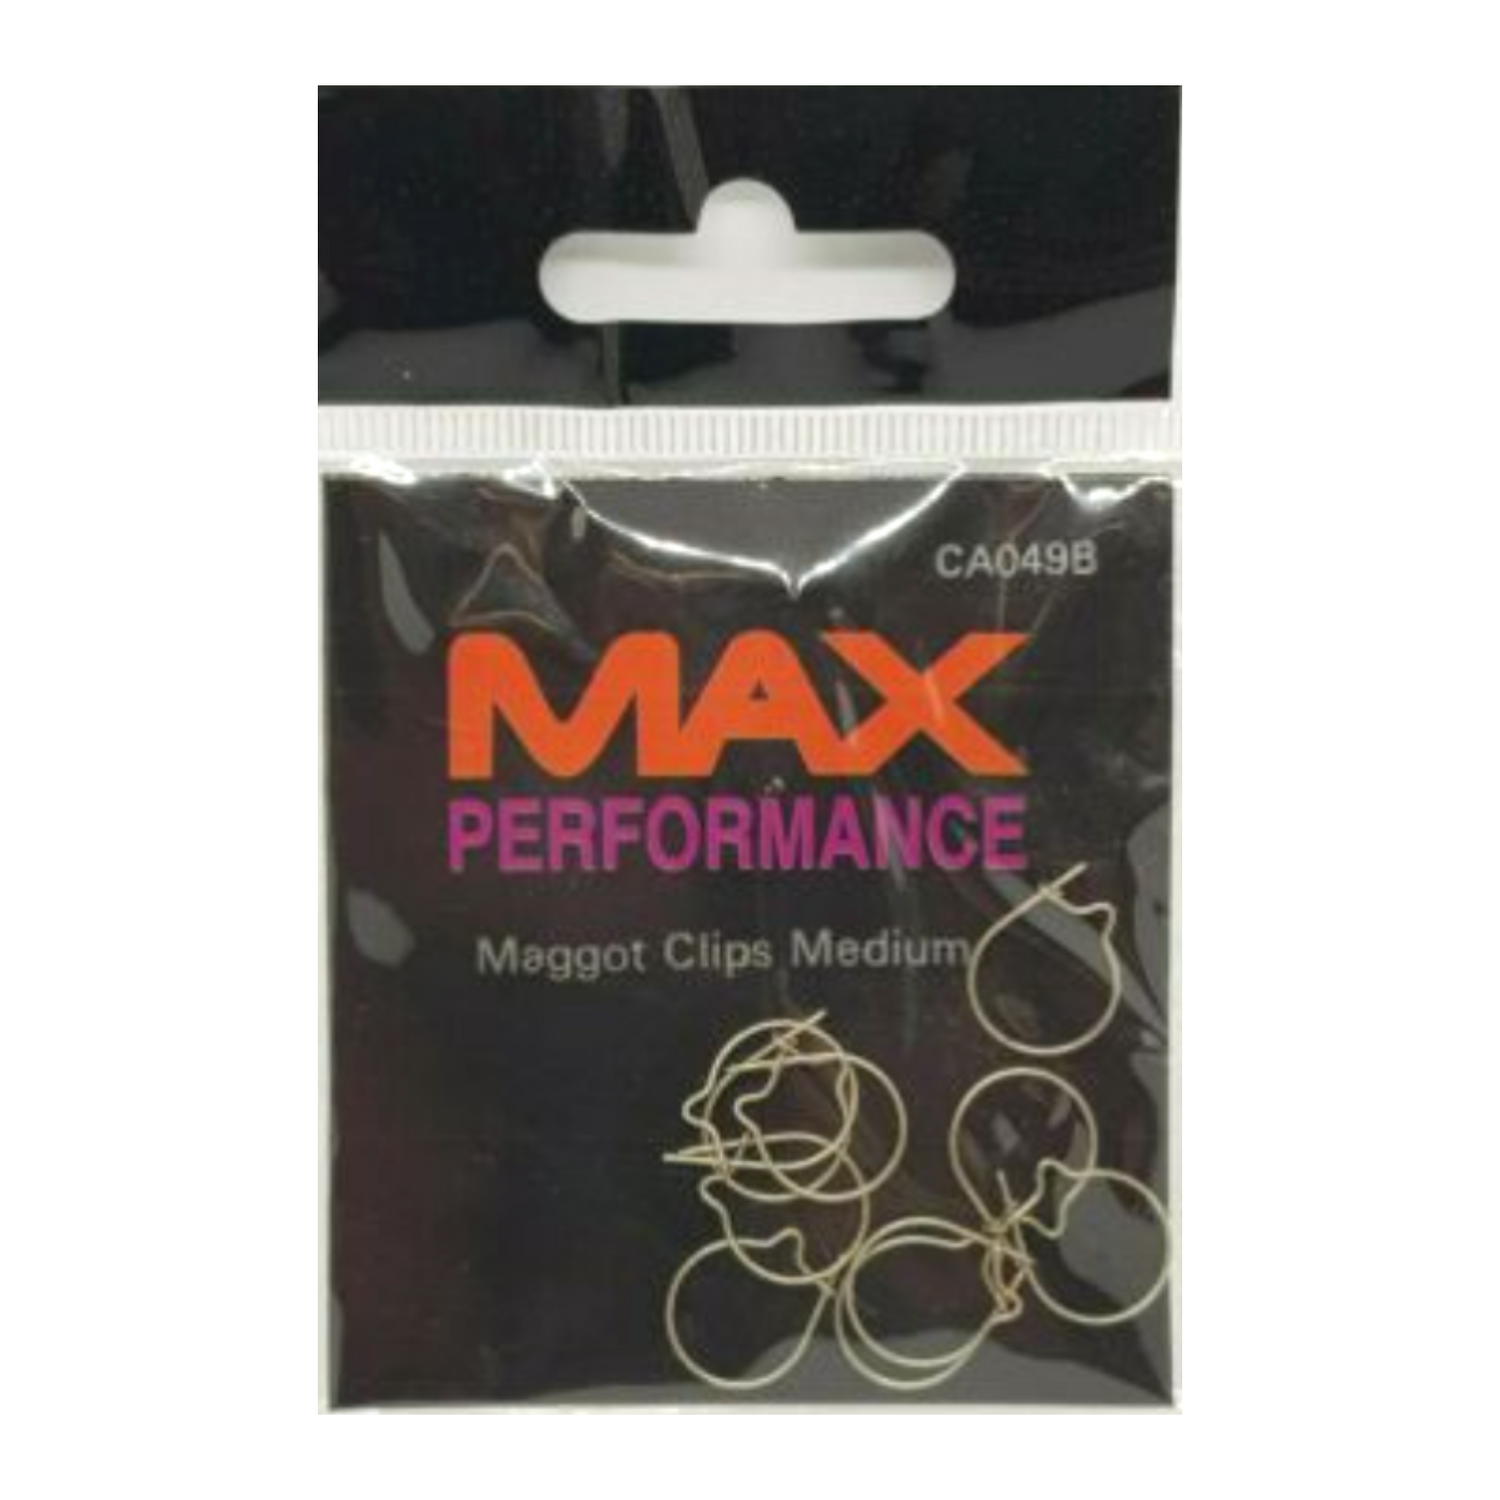 MAX Performance Maggot Clips Medium Pack 10 CA049B